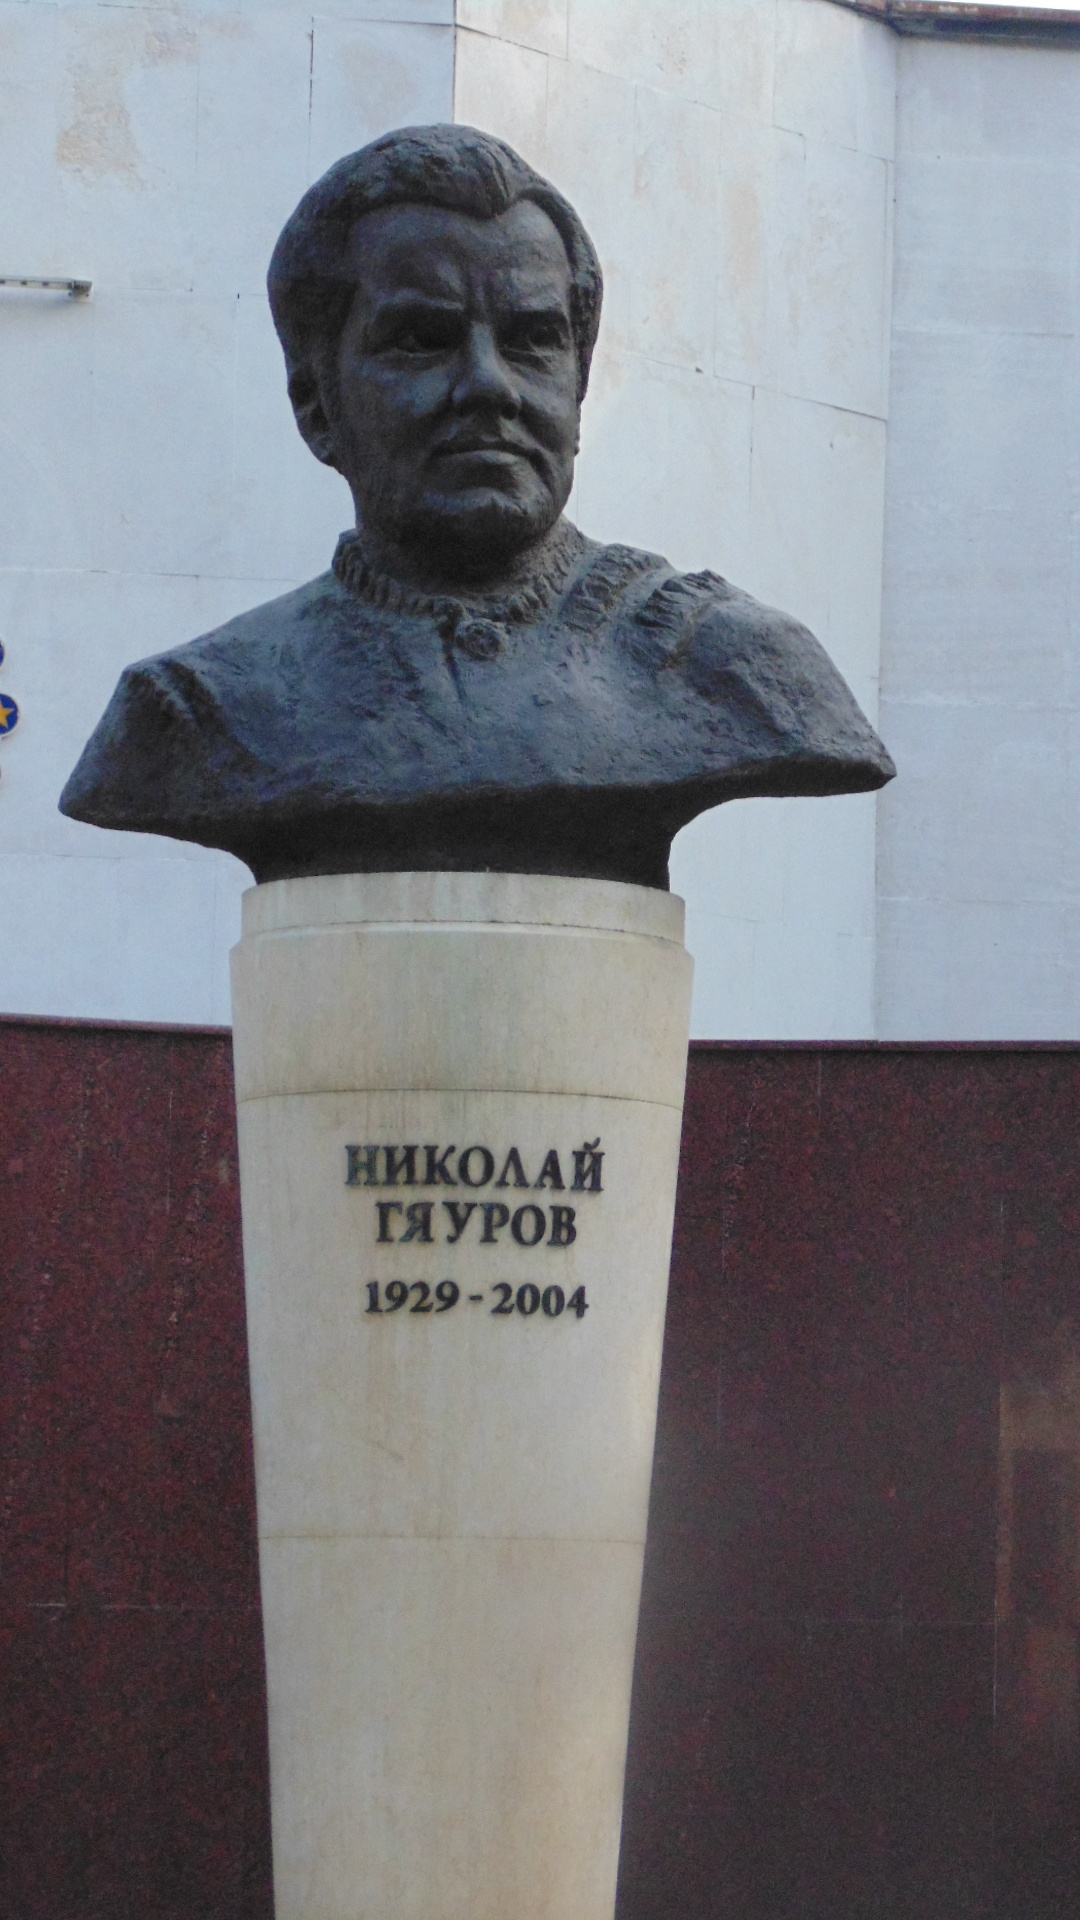 Николай Гяуров (니콜라이 기아우로프) |